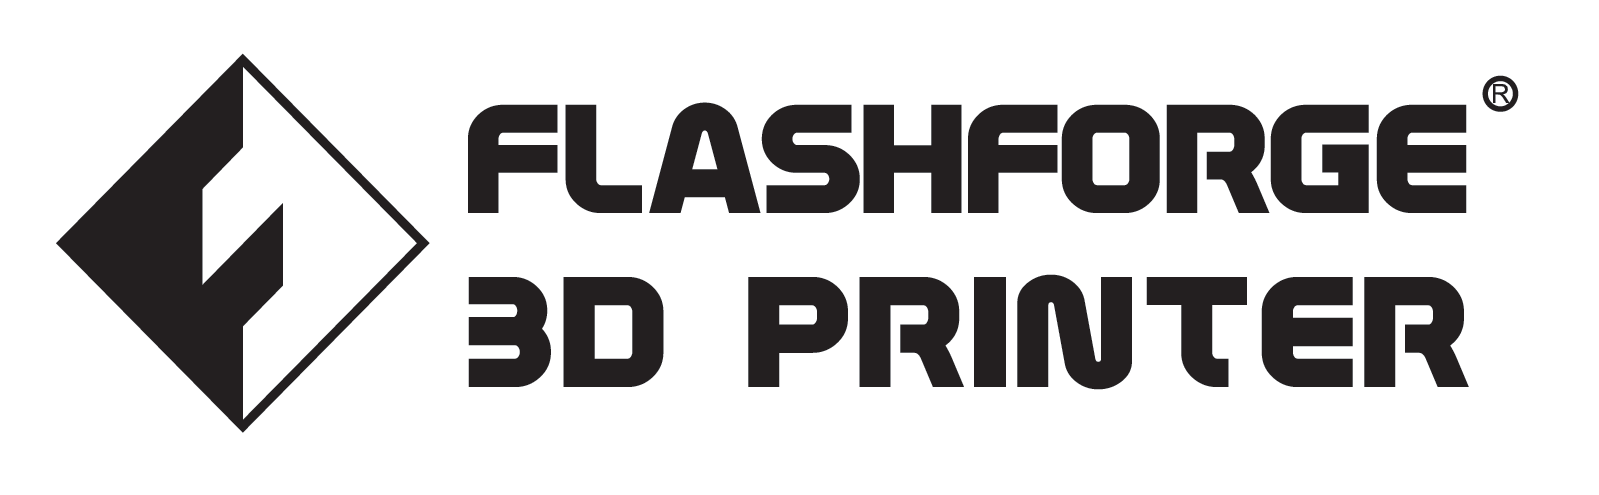 Flashforge 3D